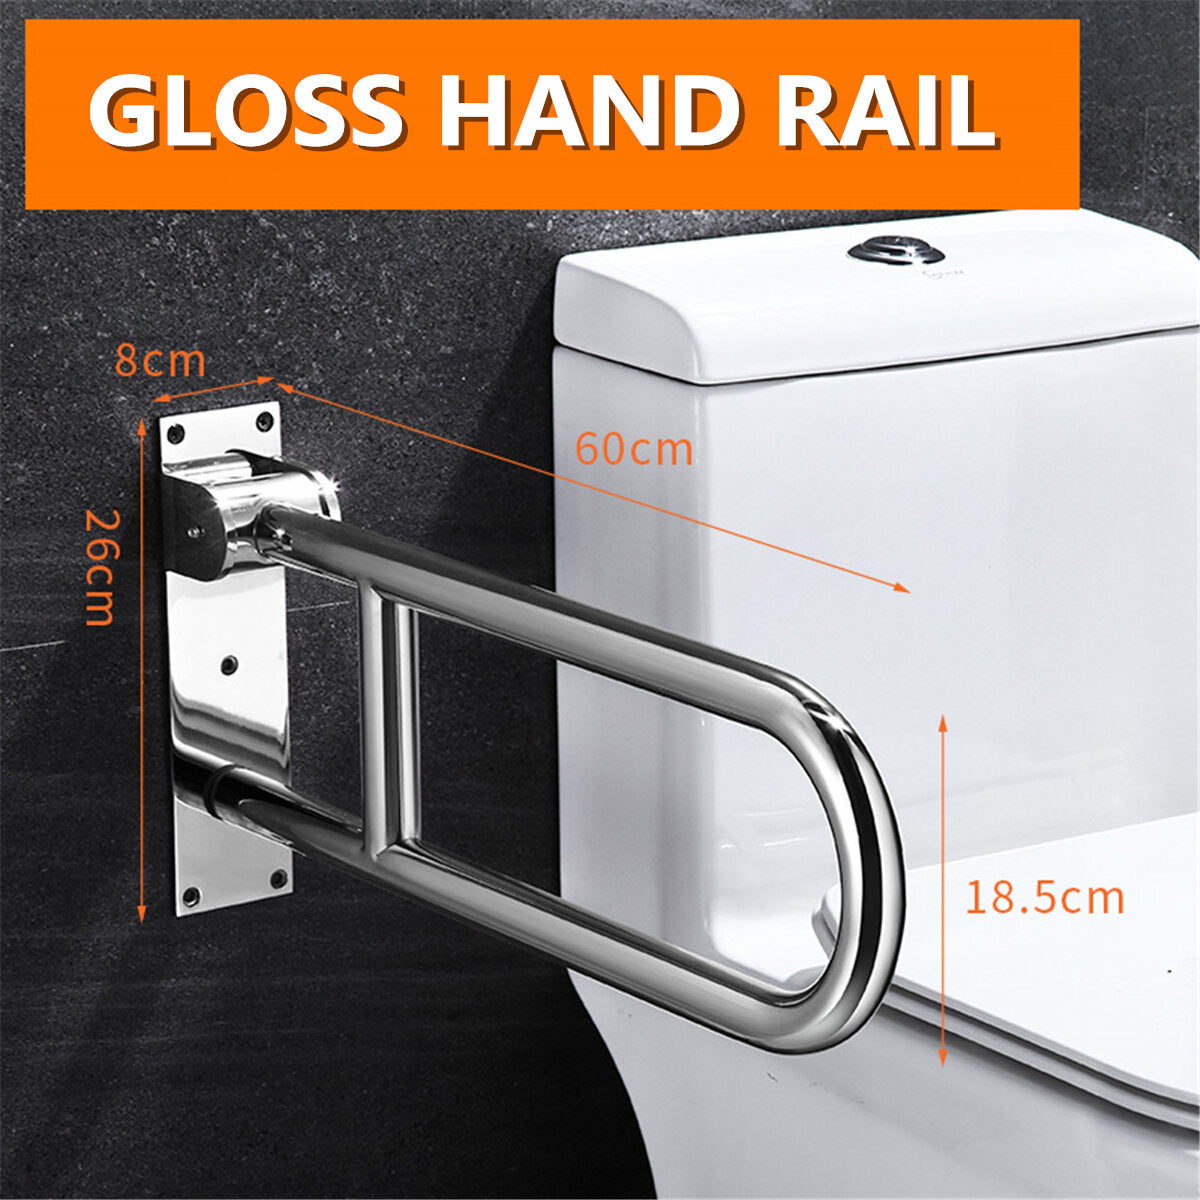 Stainless Steel Toilet Safety Frame Rail Grab Bar Handicap Bathroom Hand Grips